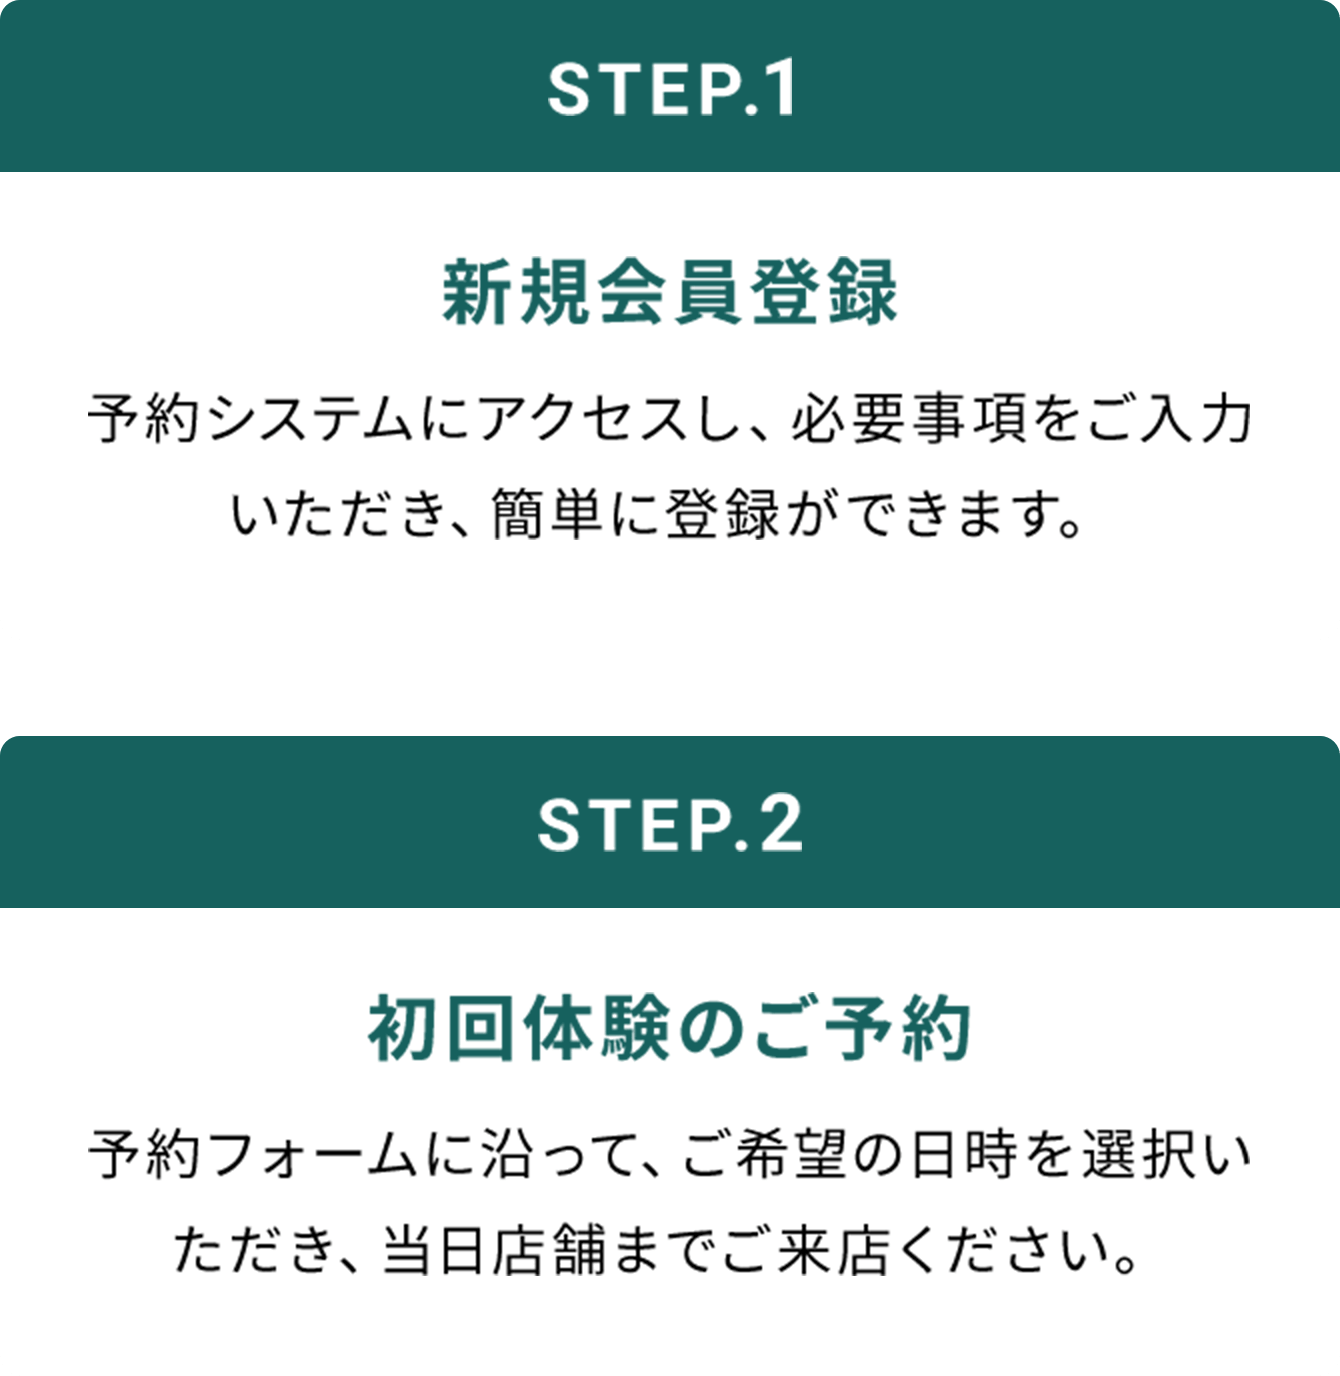 STEP.1 STEP2